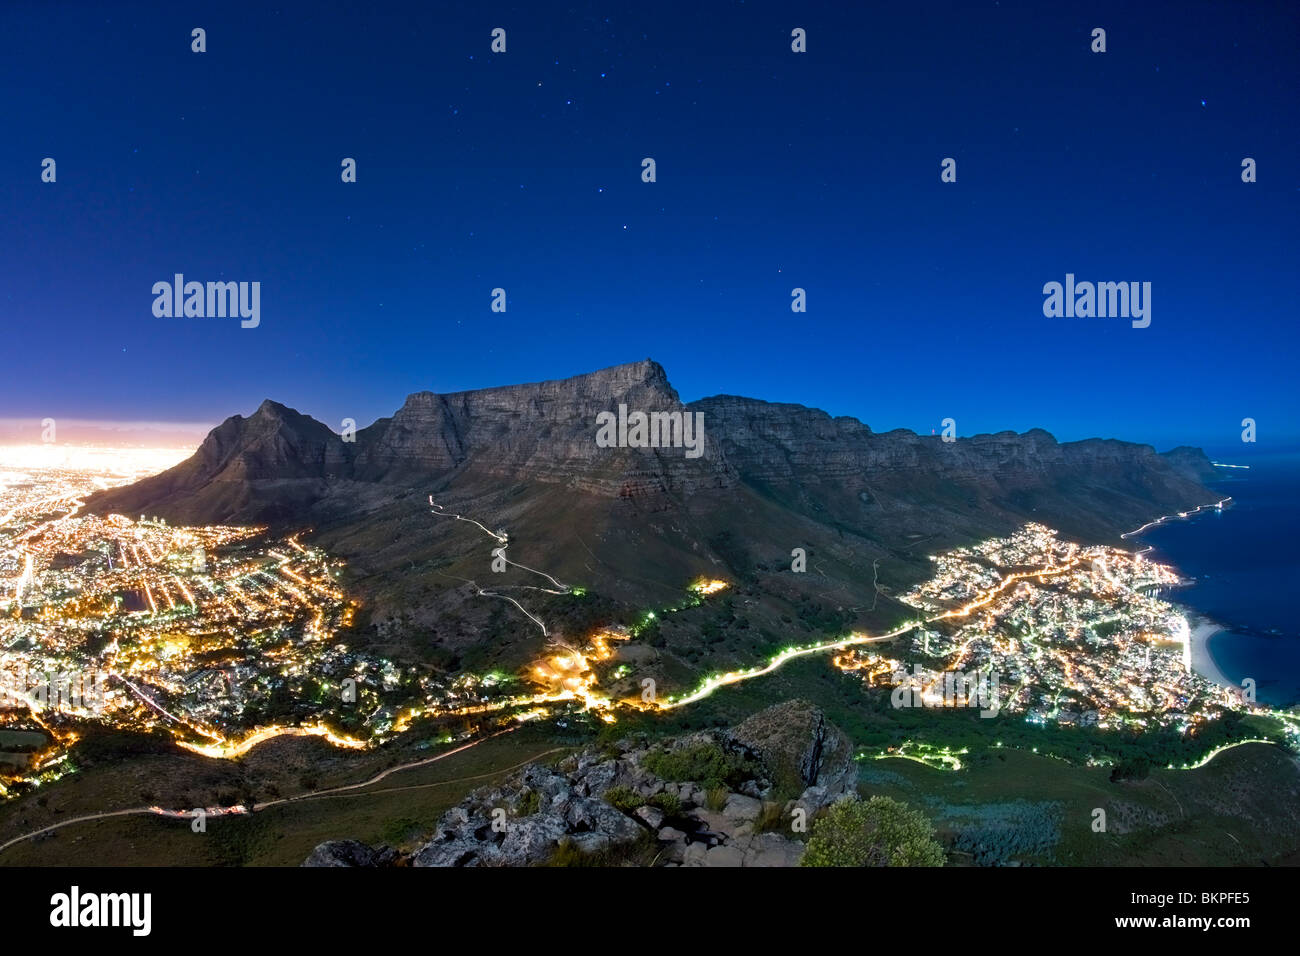 Table Mountain unter Vollmond hell mit Sternen am Himmel, Cape Town, Südafrika. Stockfoto